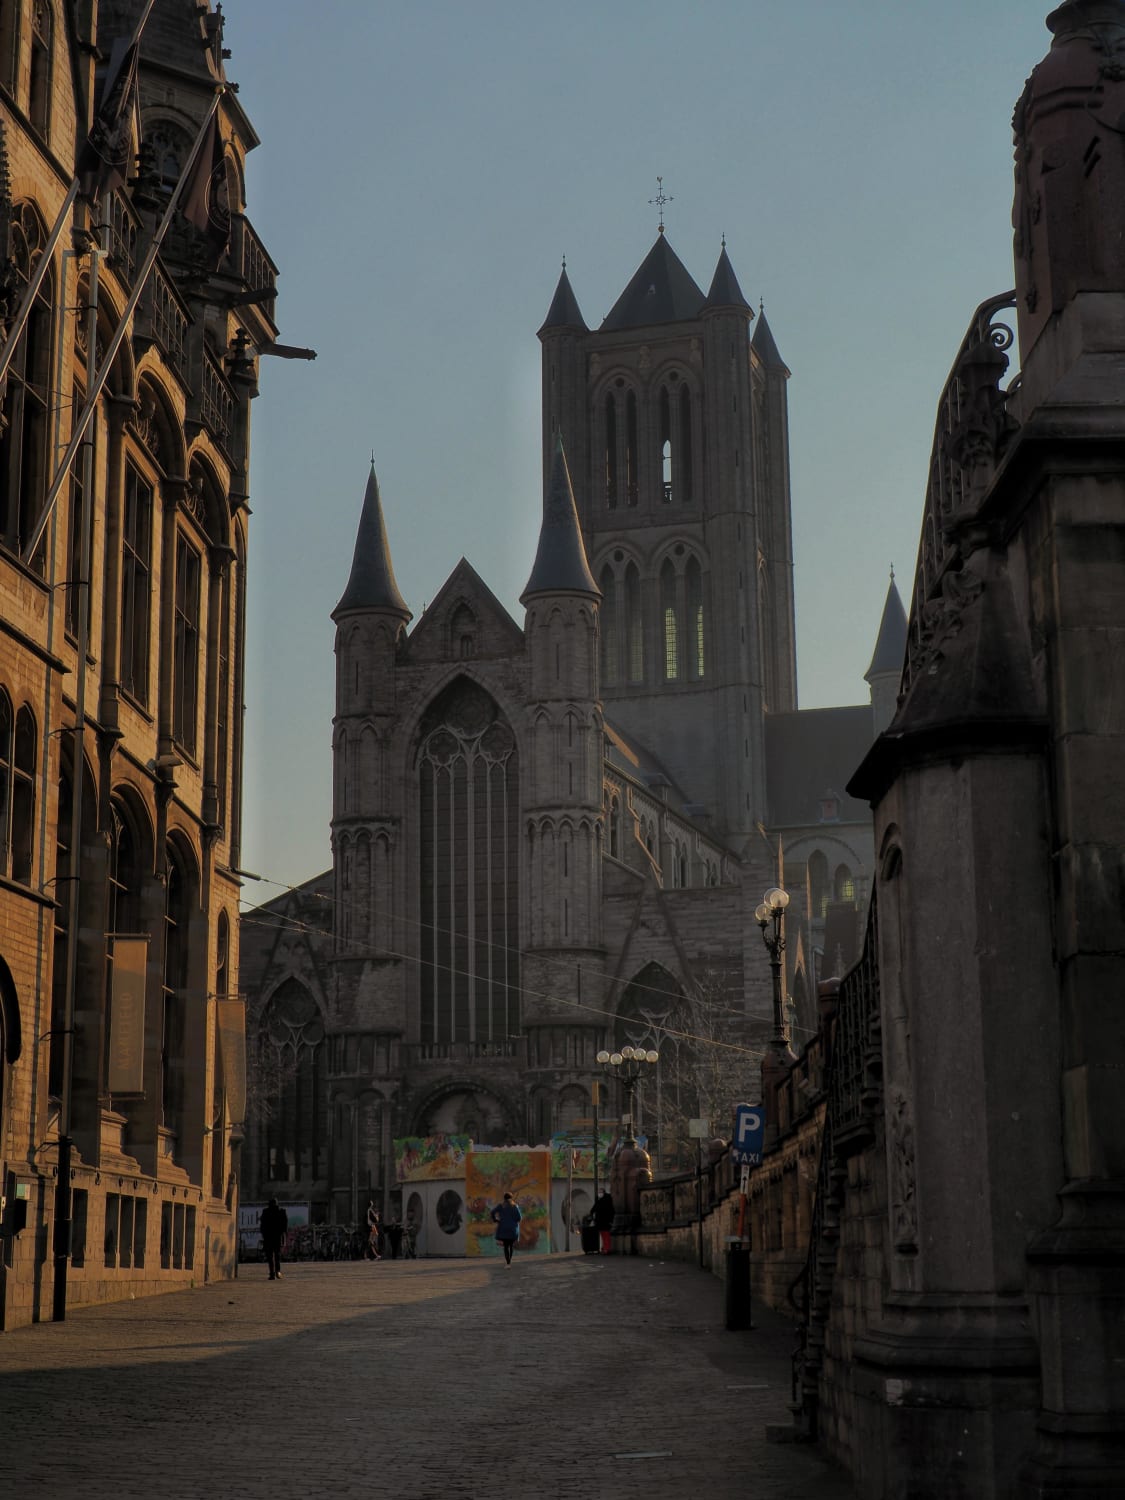 Sint-Niklaaskerk, Ghent, Belgium🇧🇪 built in the local Scheldt Gothic style.